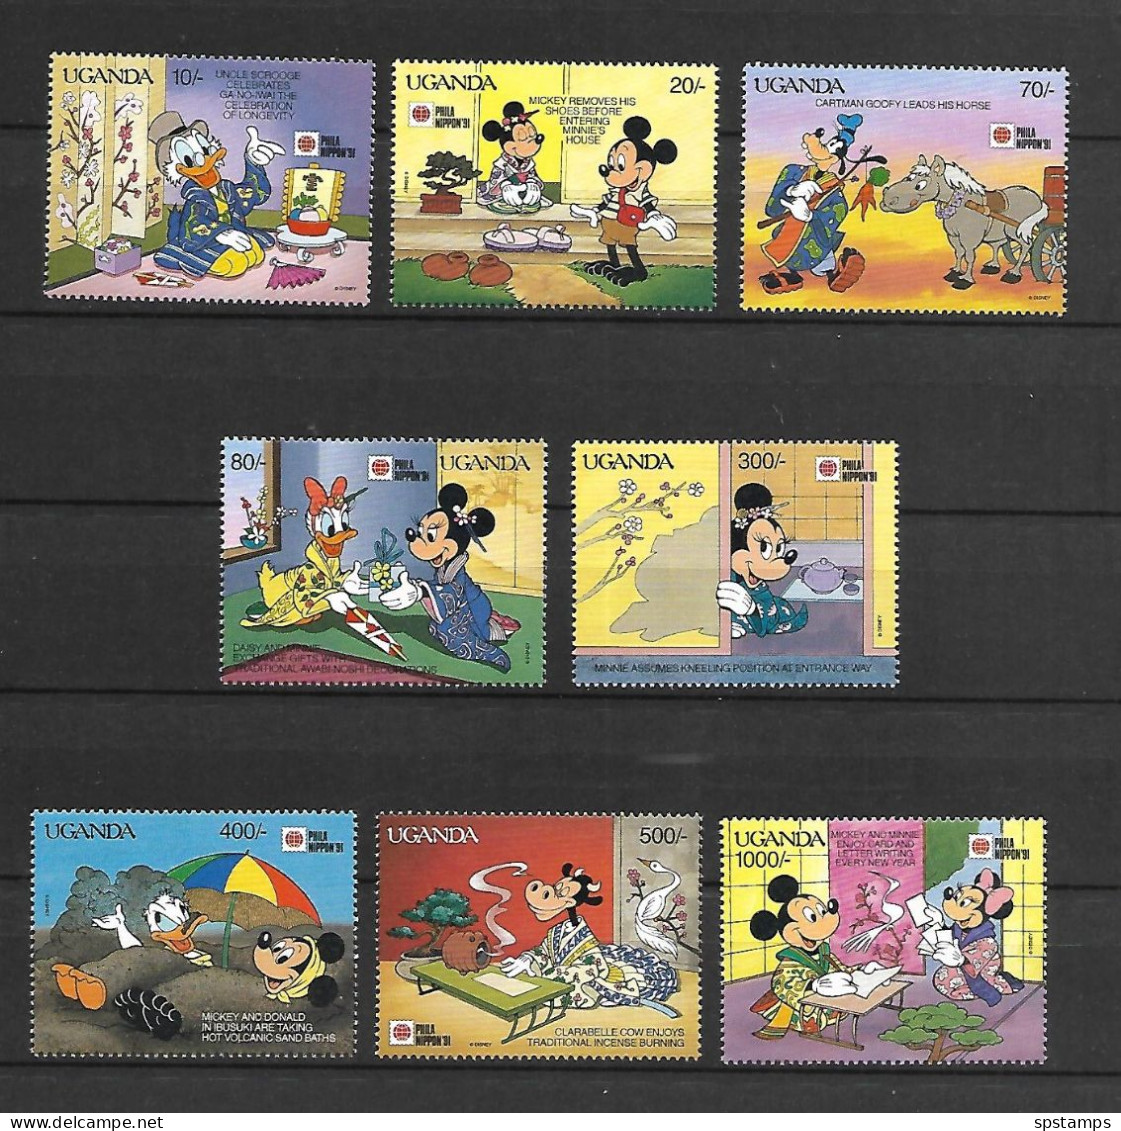 Disney Set Uganda 1991 Disney Characters Engaging In Japanese Customs MNH - Disney